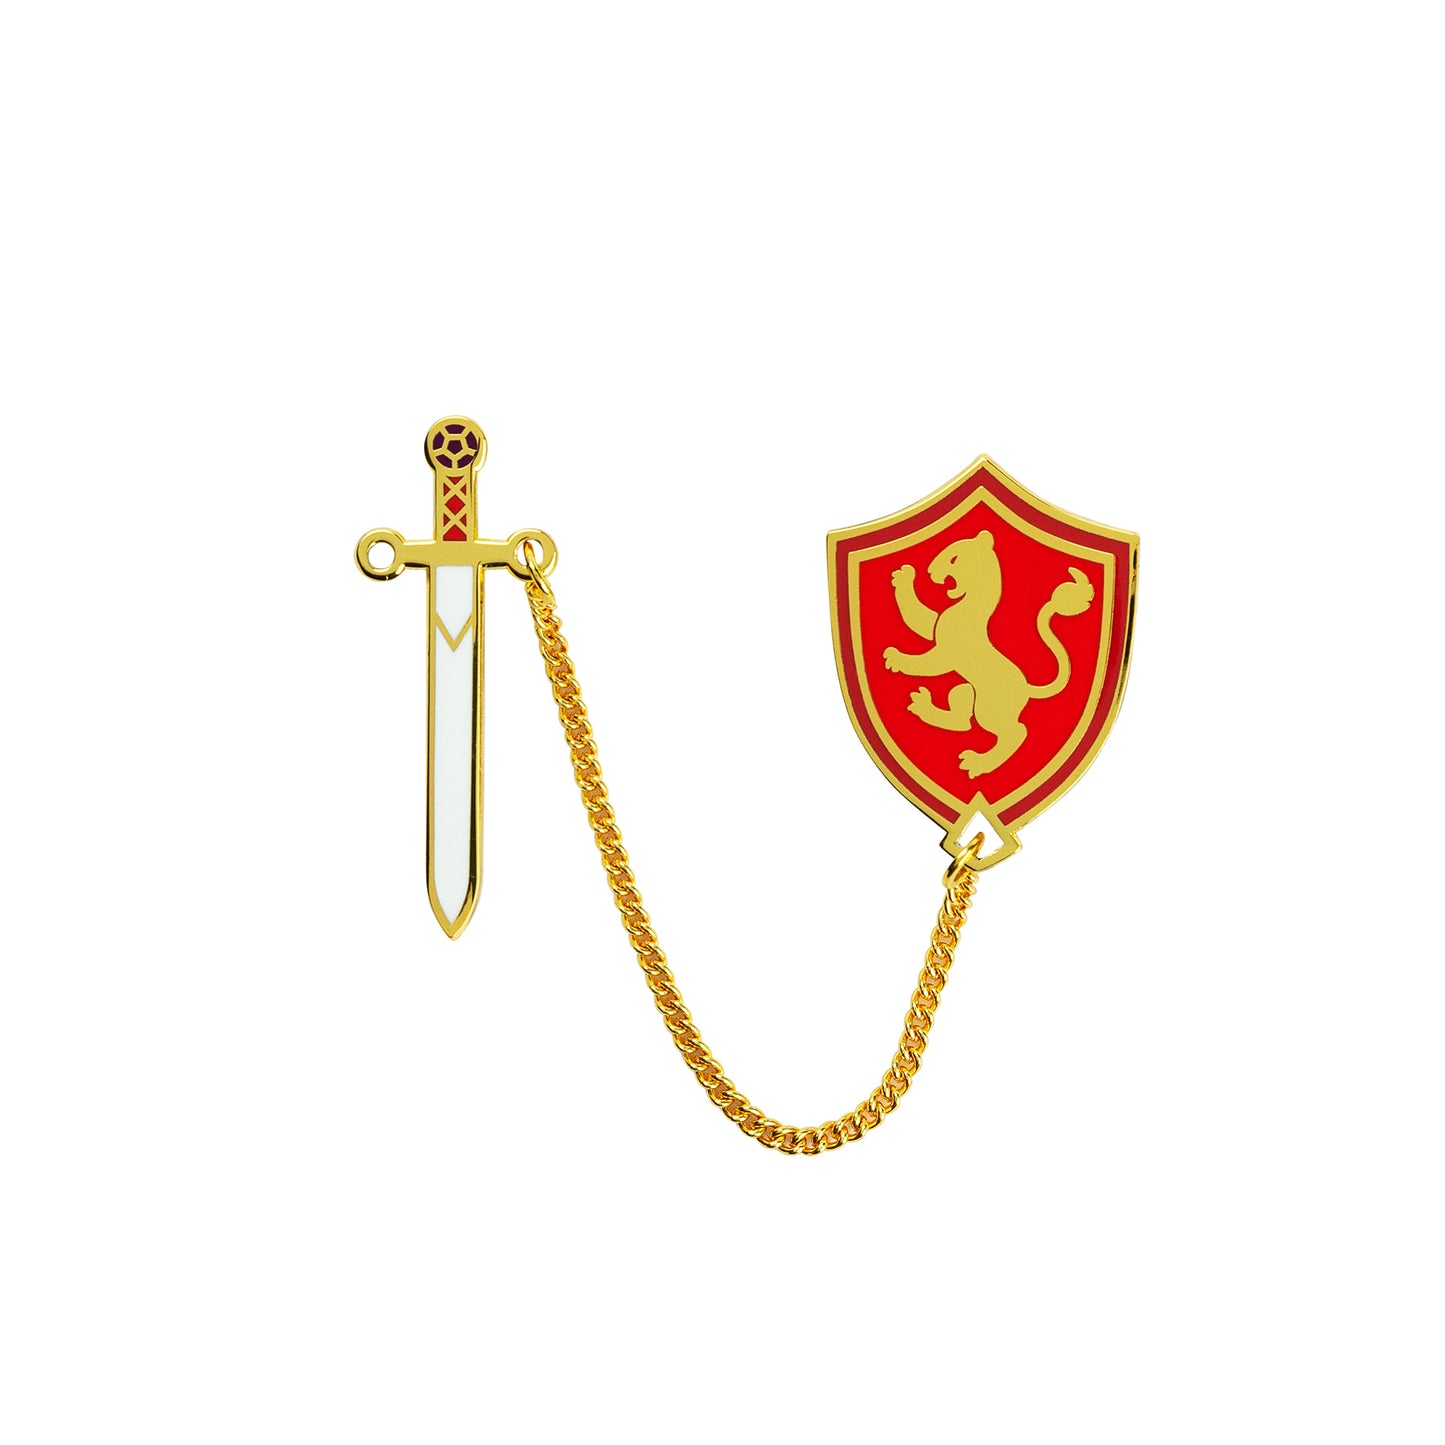 The Tamora Pierce Alanna Sword & Shield pins against a white background.